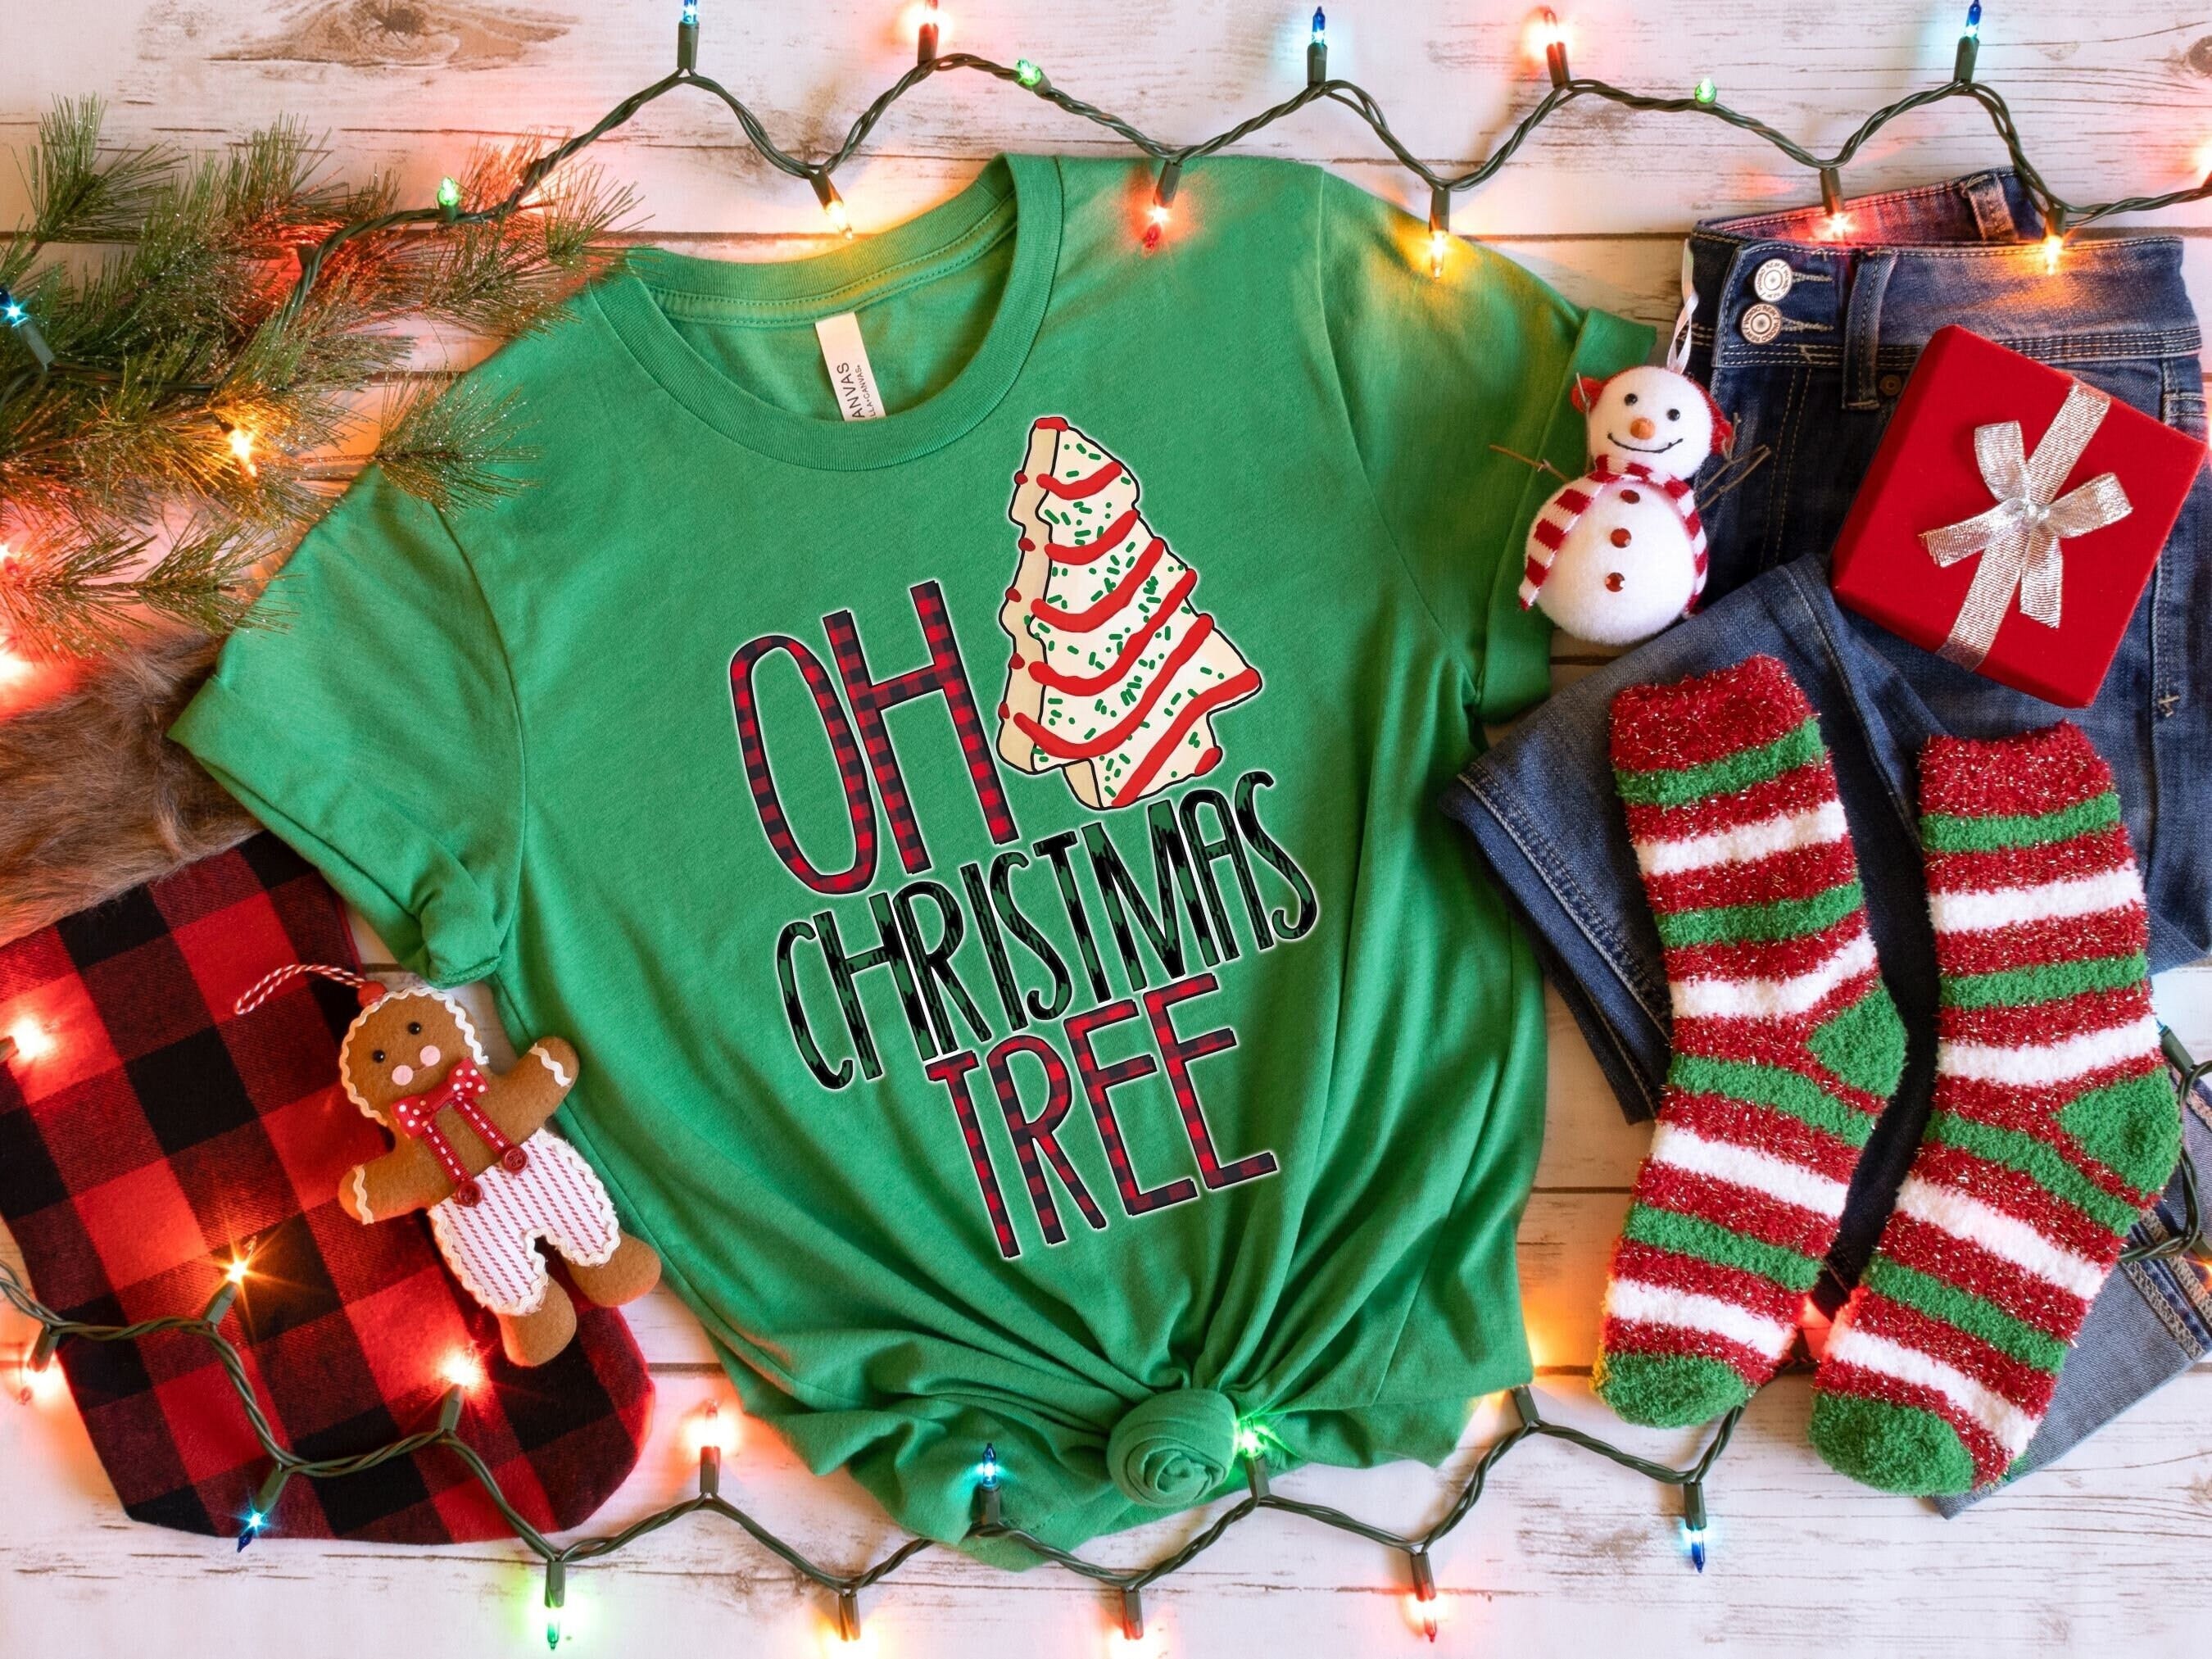 Oh Christmas Tree Cake Shirt, Funny Christmas Shirt for Mom, Holiday Family Matching PJs, Green, Christmas Snack Cake, Christmas Gift